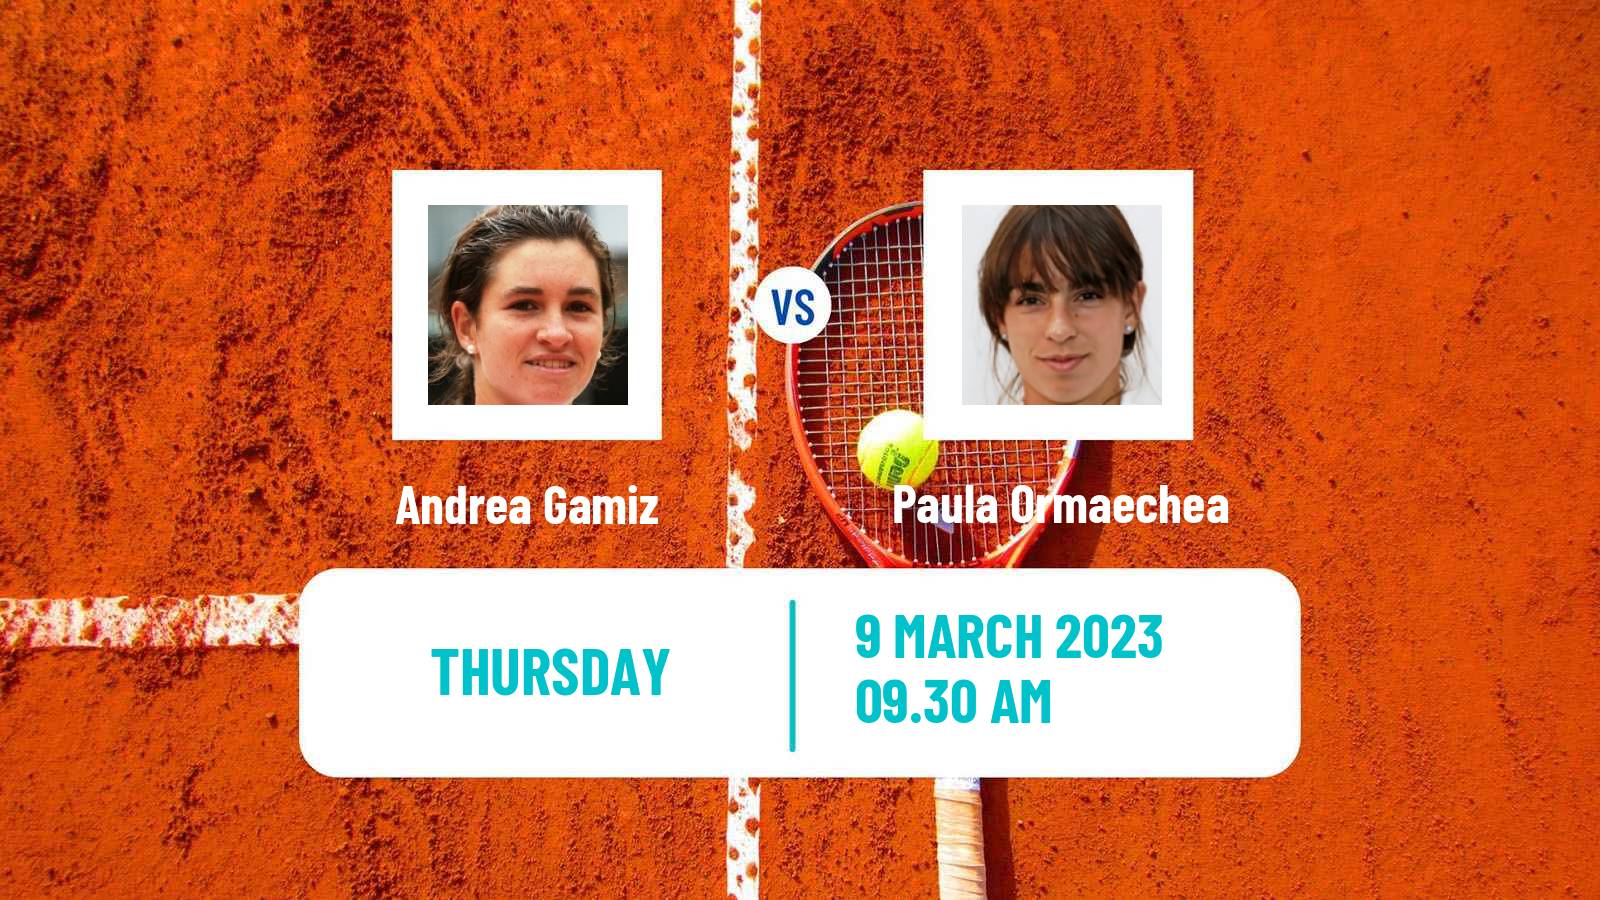 Tennis ITF Tournaments Andrea Gamiz - Paula Ormaechea